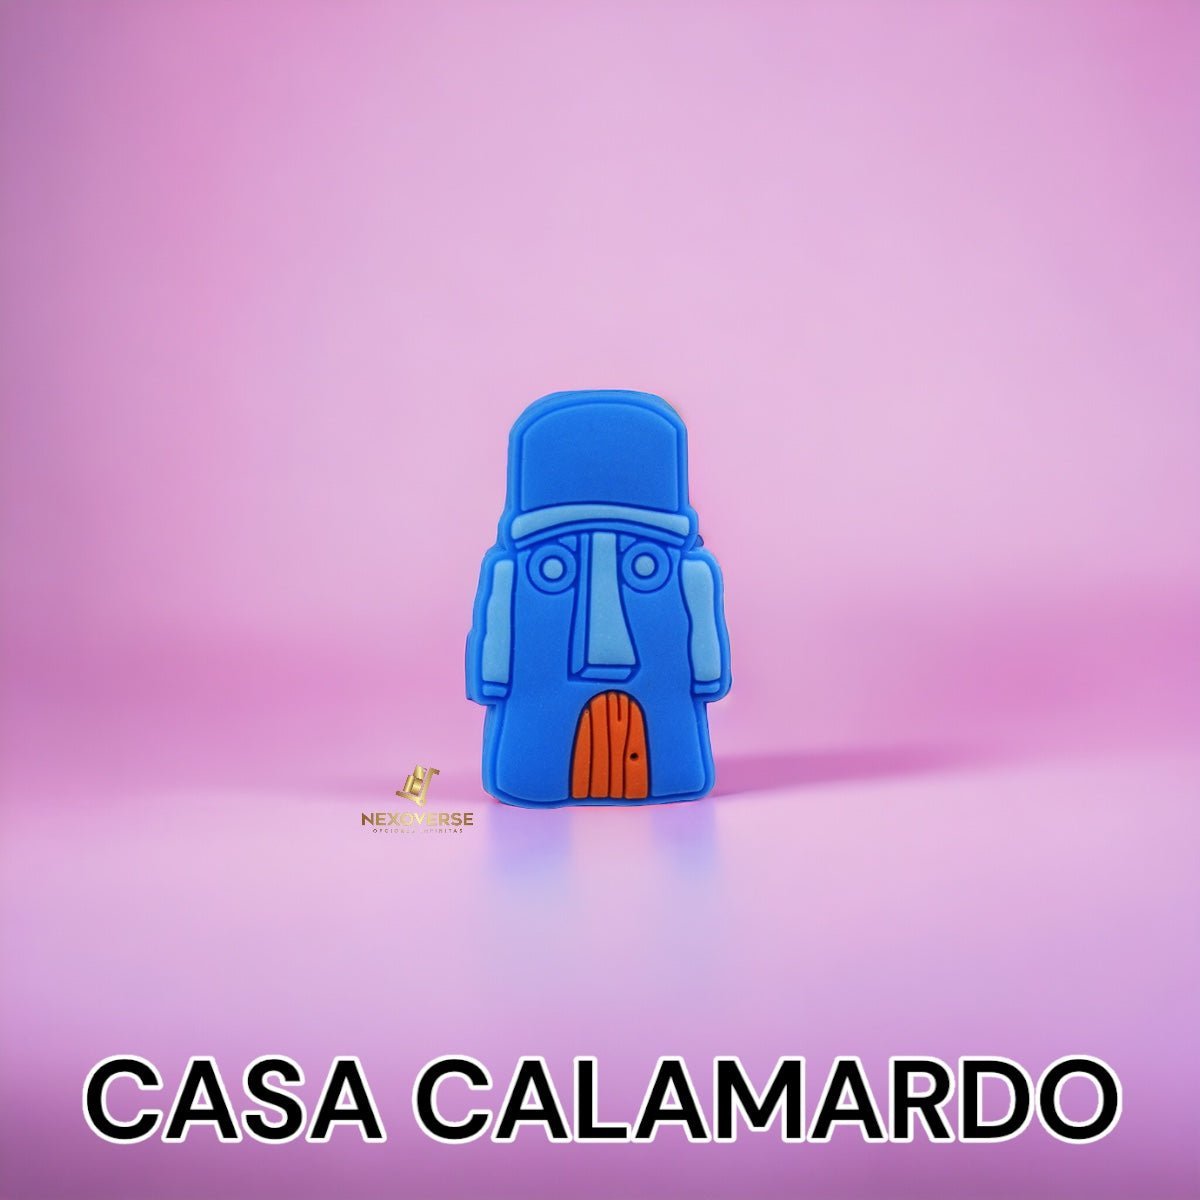 CASA CALAMARDO Pin - NexoVerse